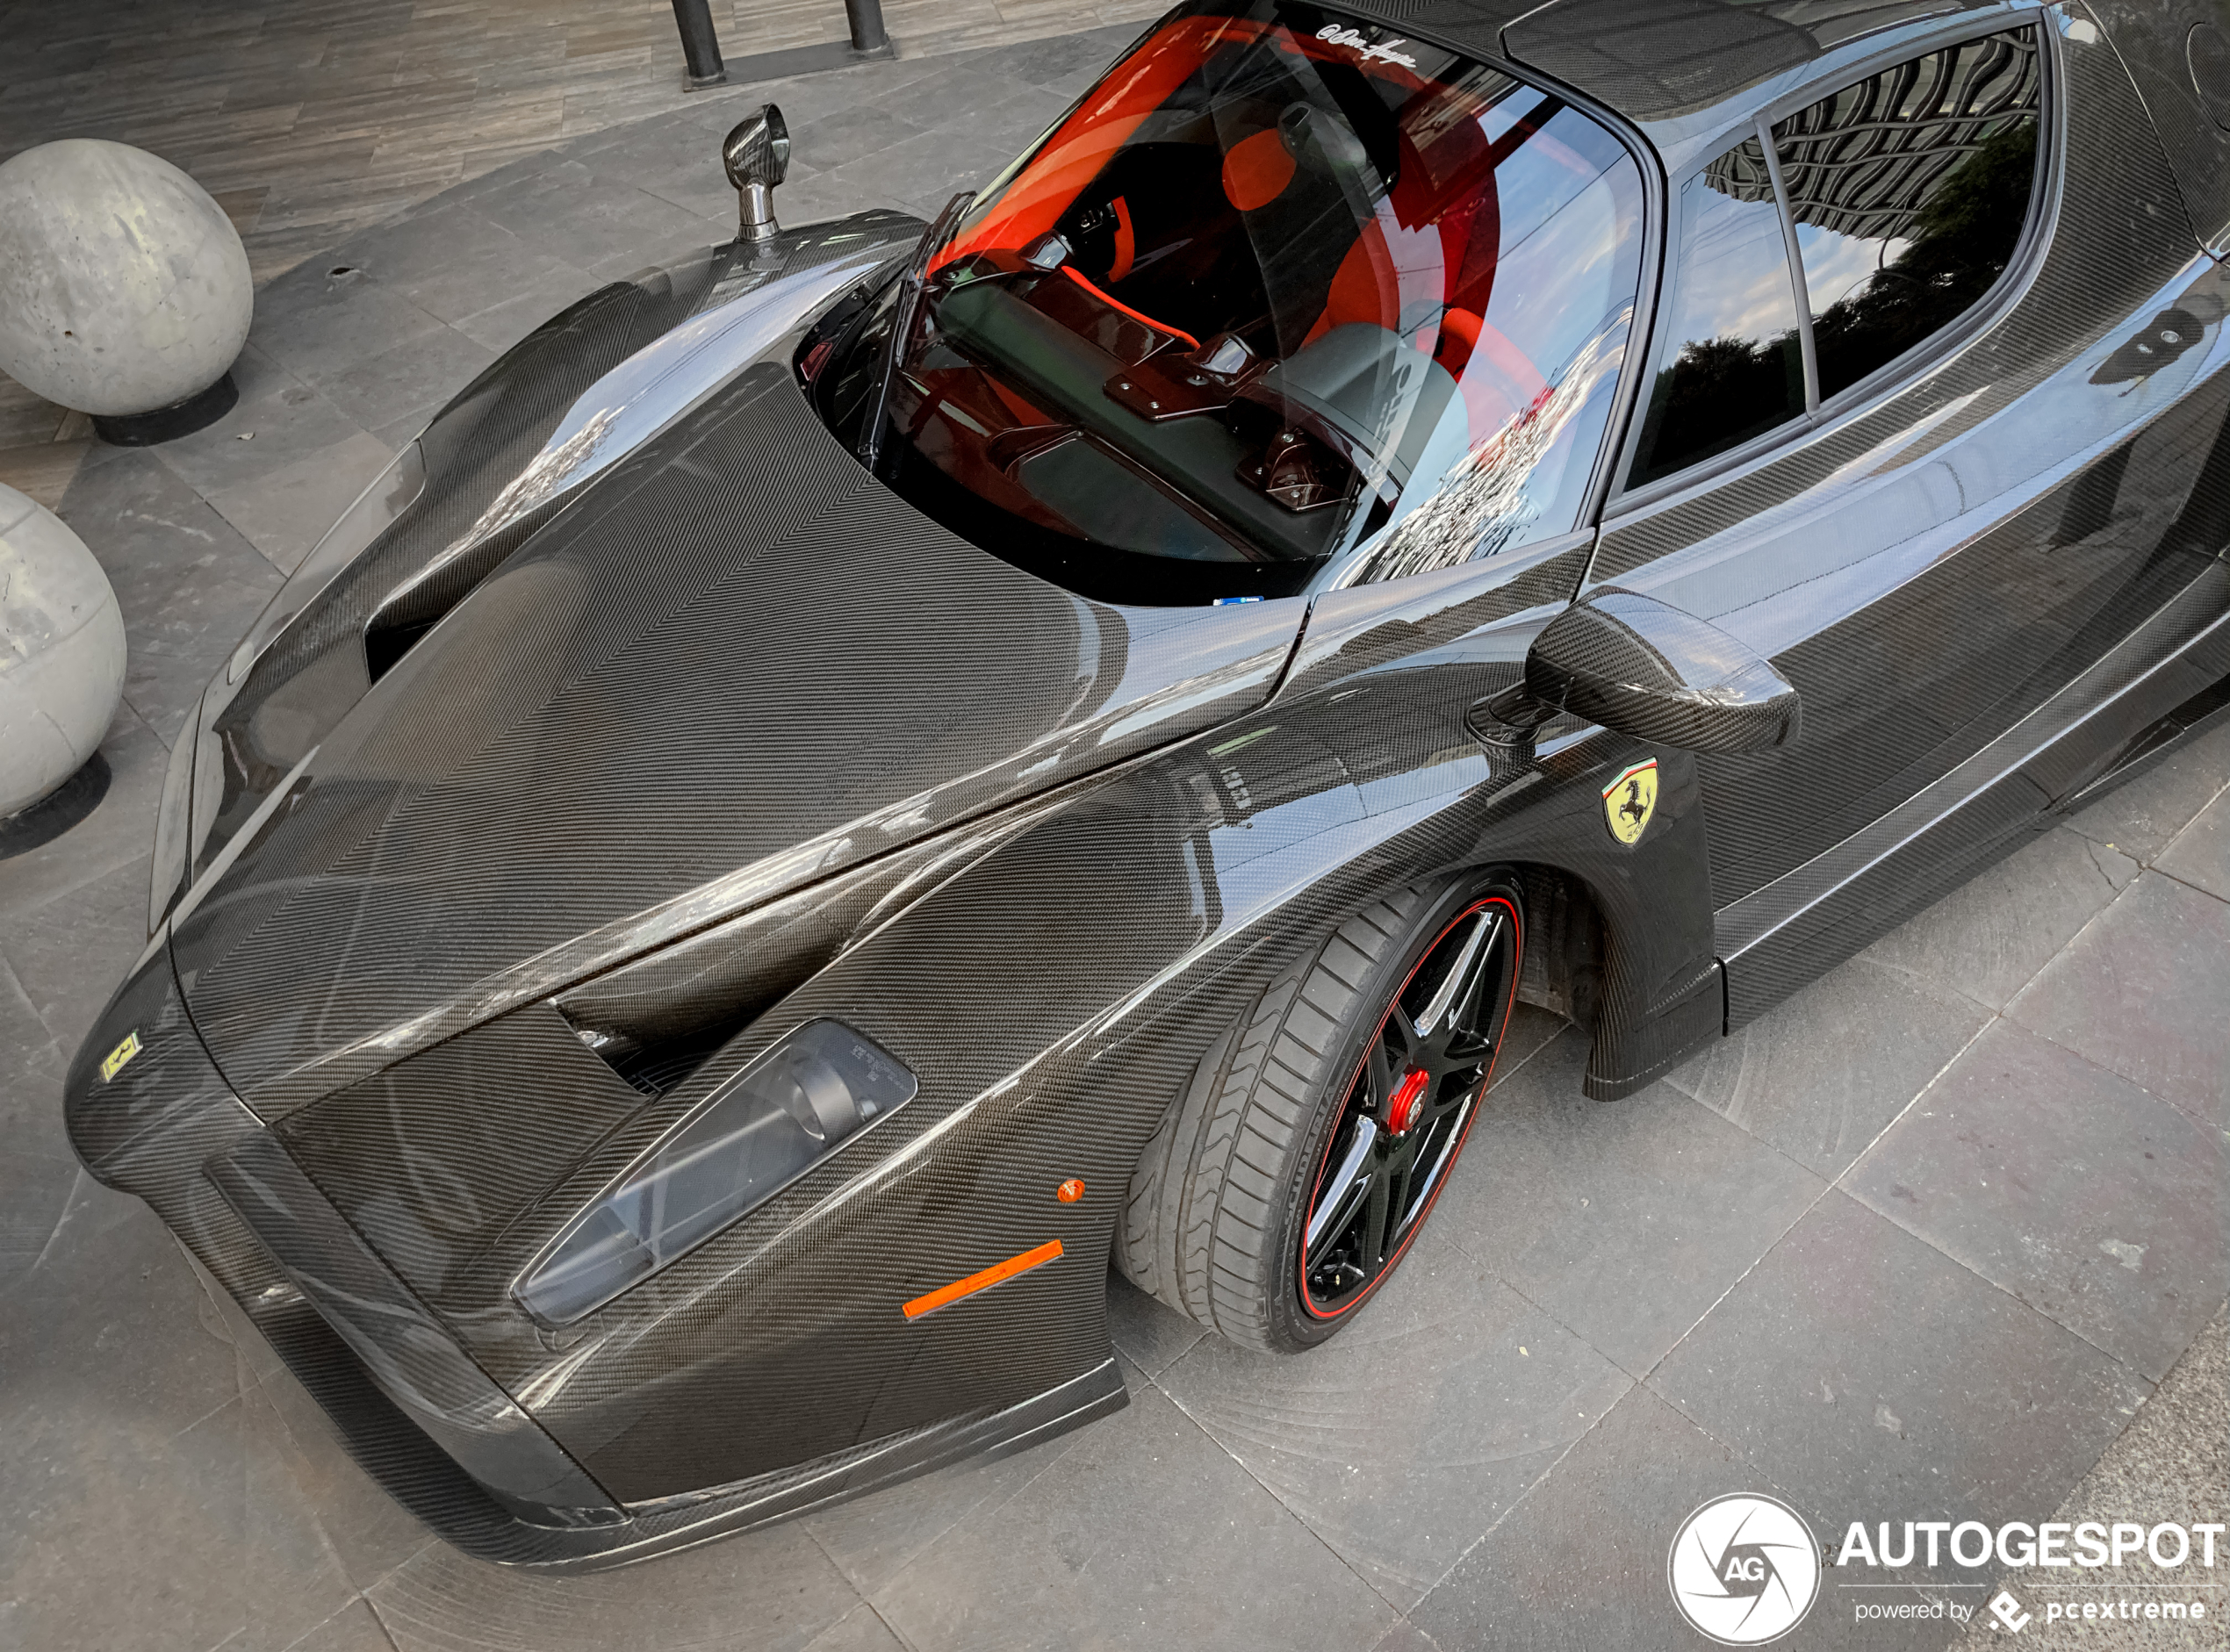 Heel speciaal! Ferrari Enzo Ferrari met carbon fiber body